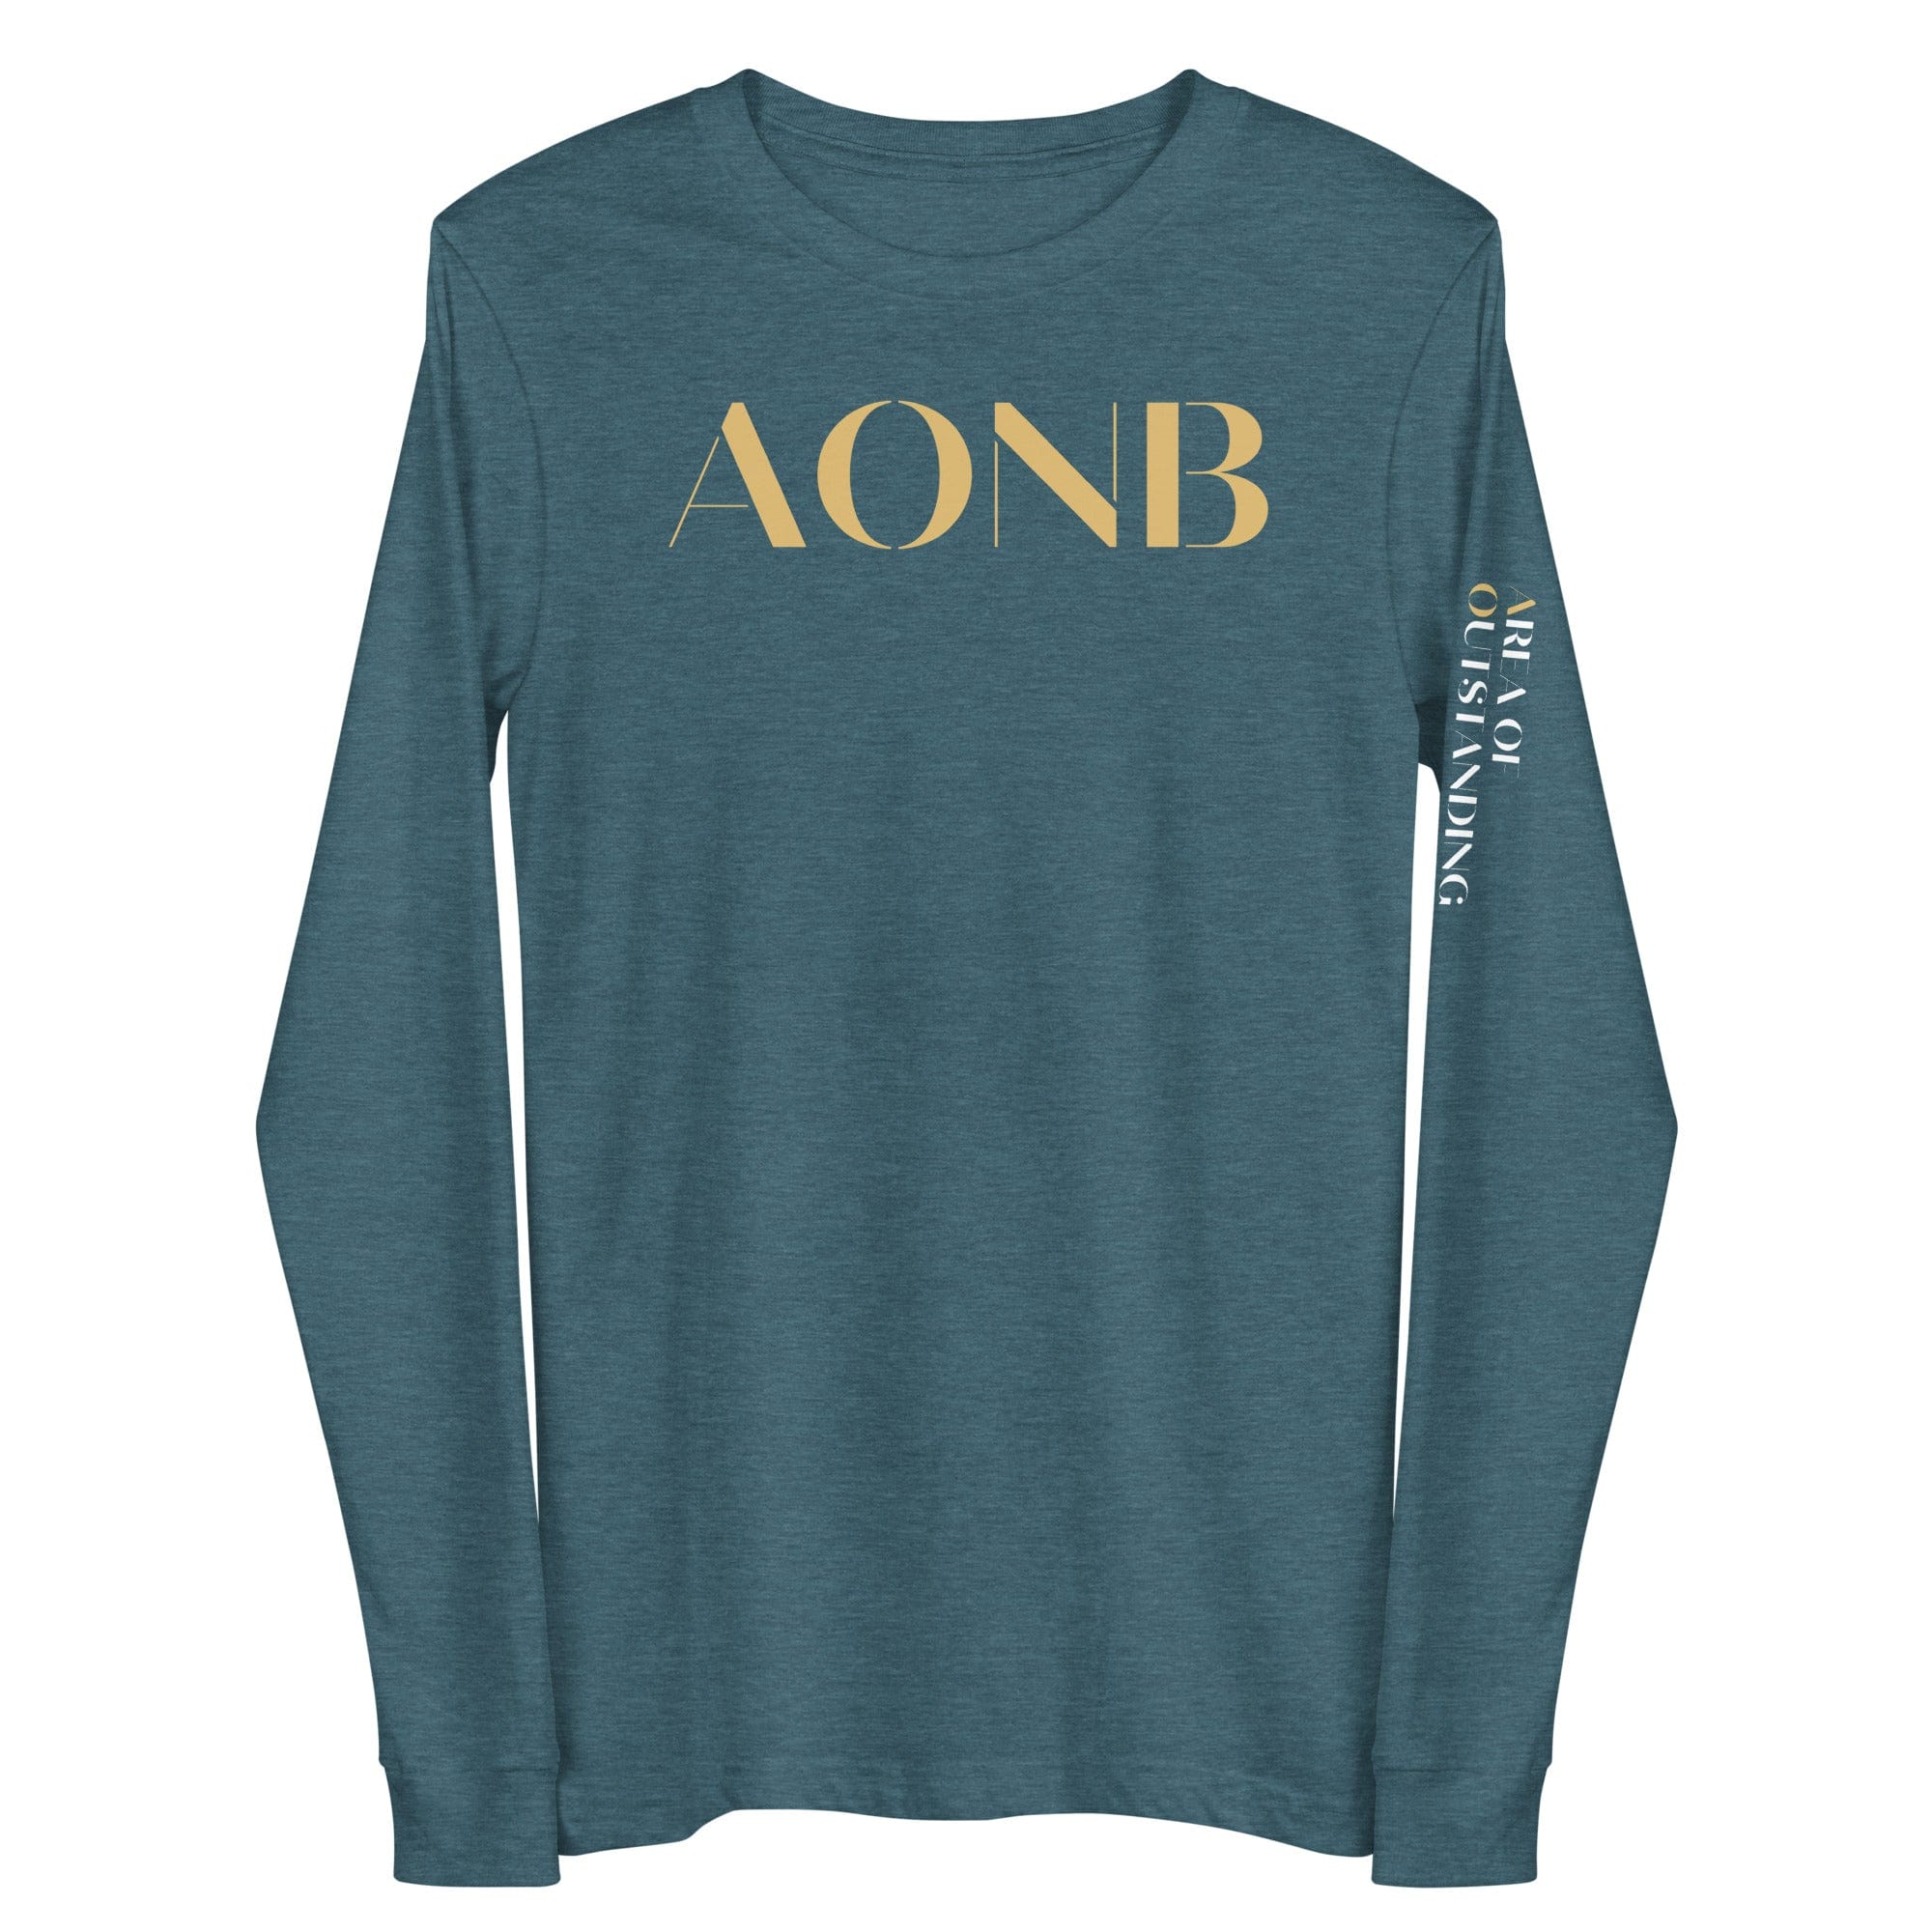 AONB Long-Sleeve Shirt | Area of Outstanding Natural Beauty Shirts & Tops Jolly & Goode